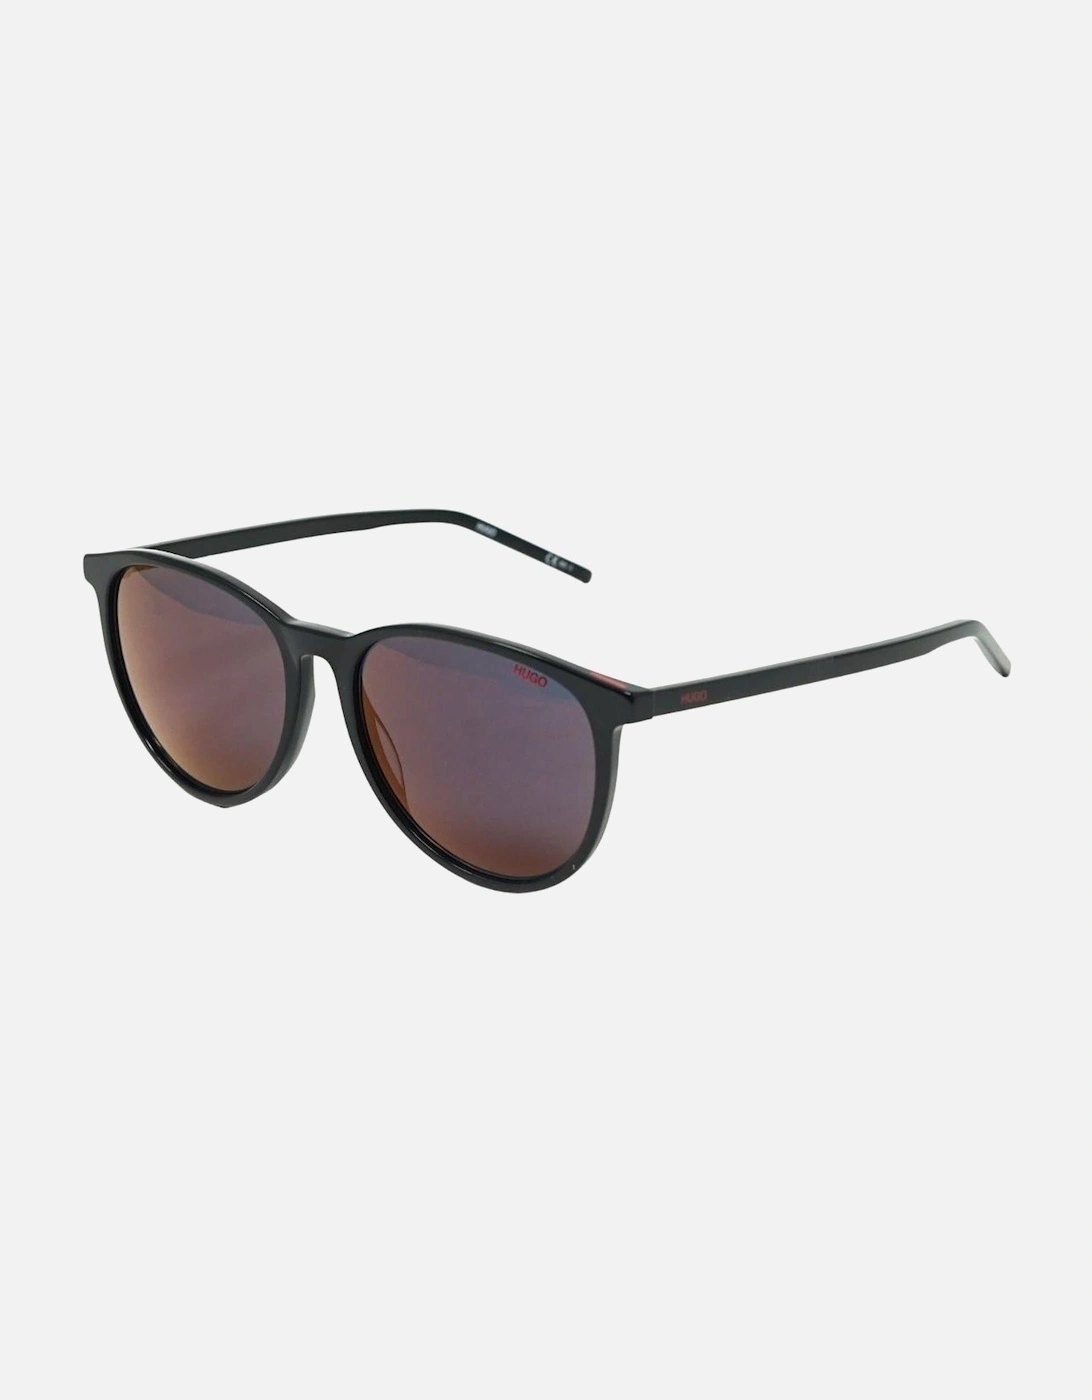 HG1096/S LNRD 807 Black Sunglasses